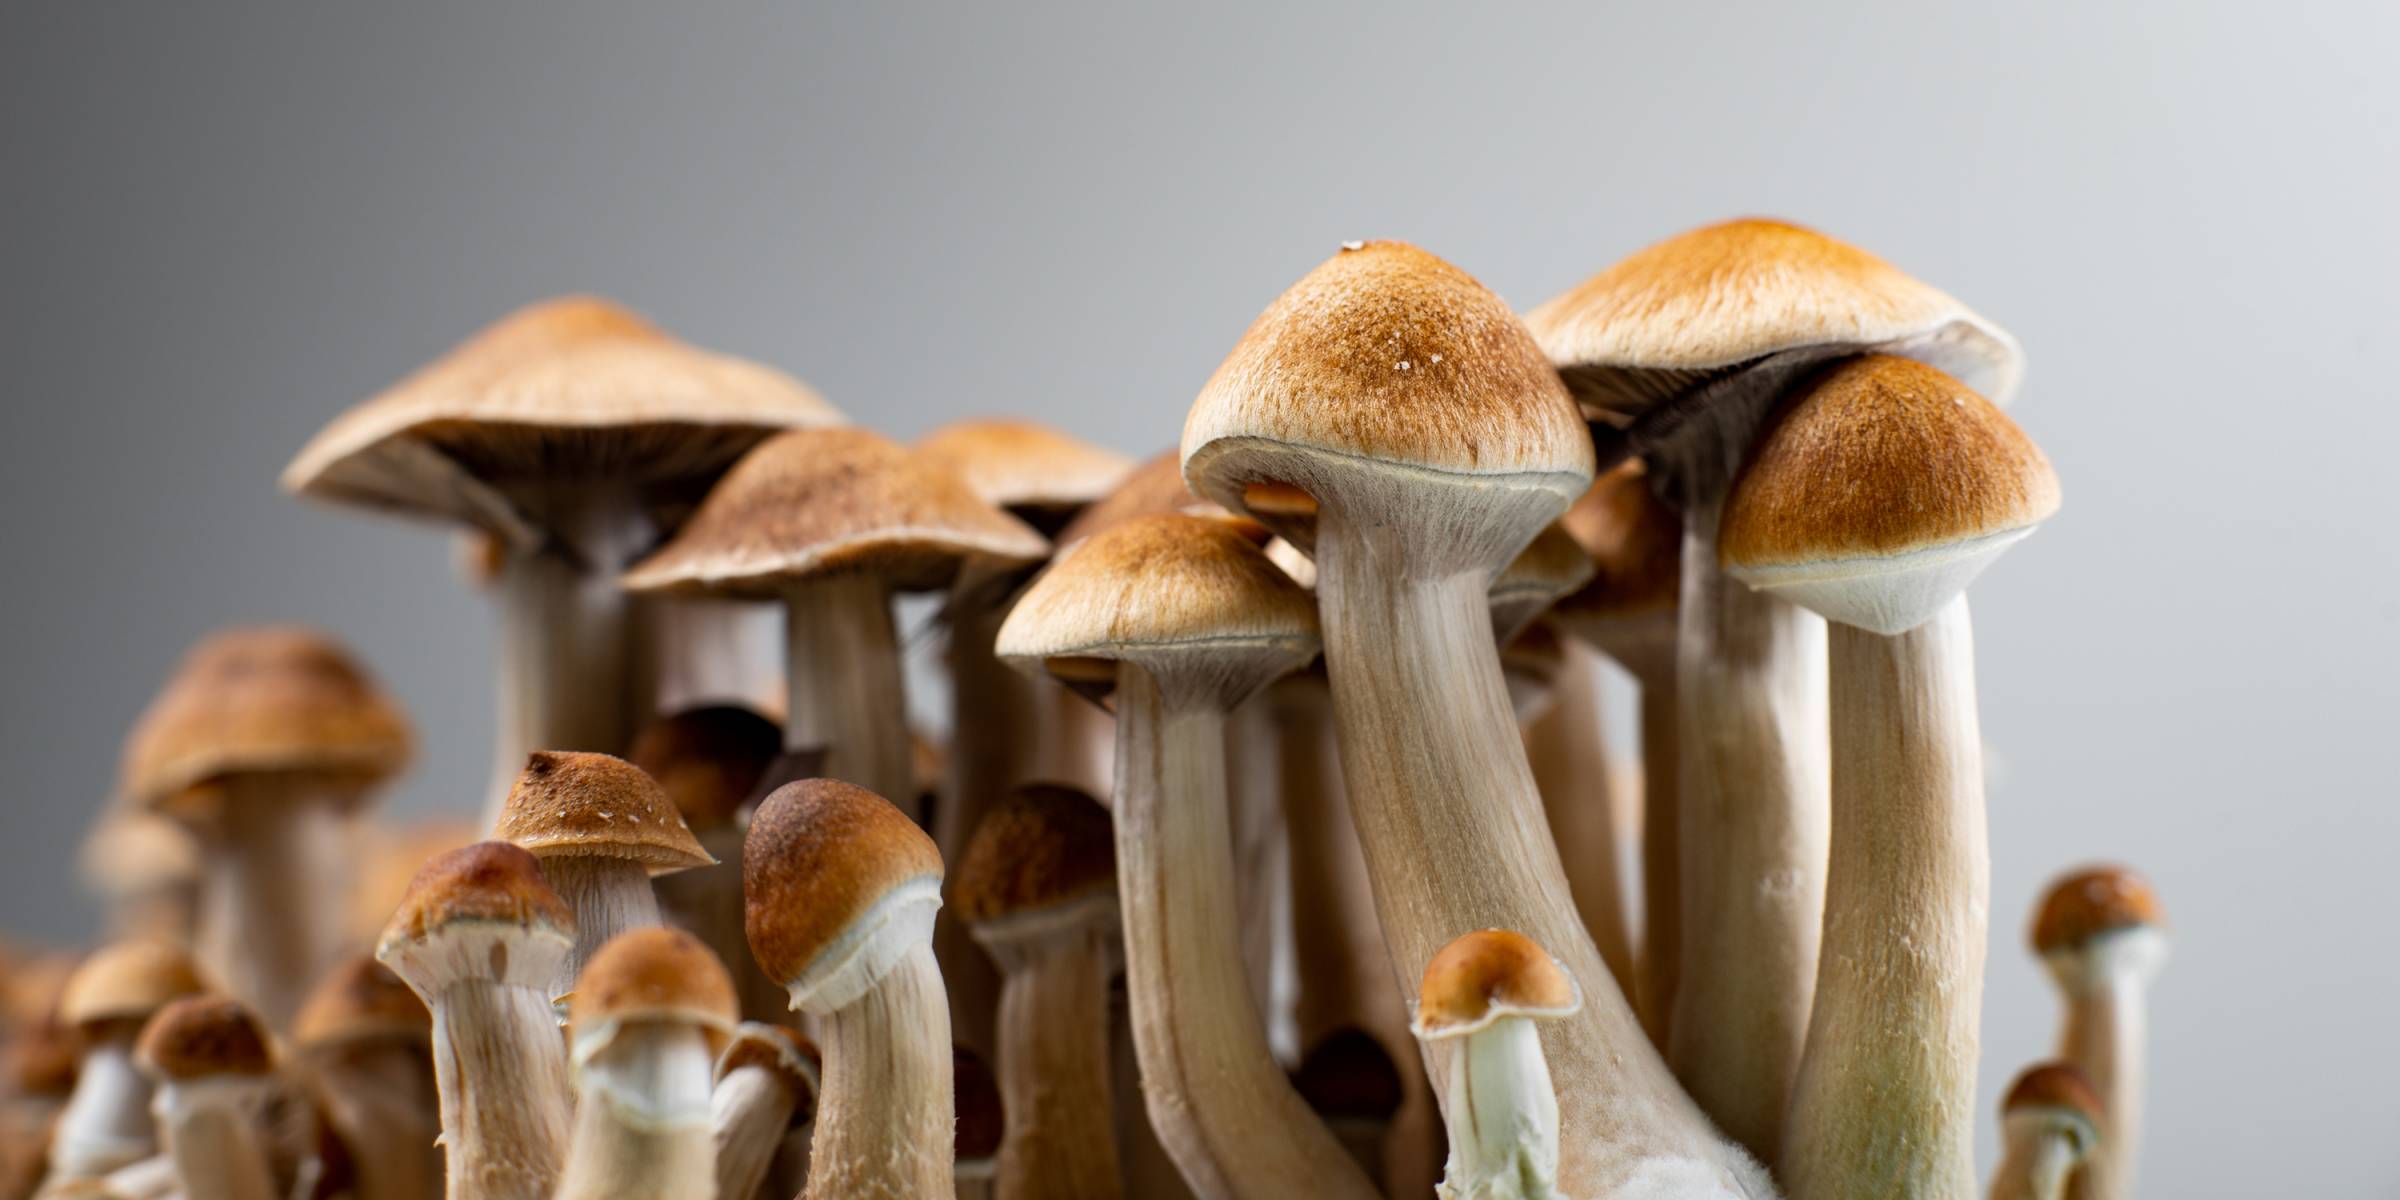 Psilocybin Mushrooms Greatly Enhance Creative Thinking, New Clinical Study Confirms